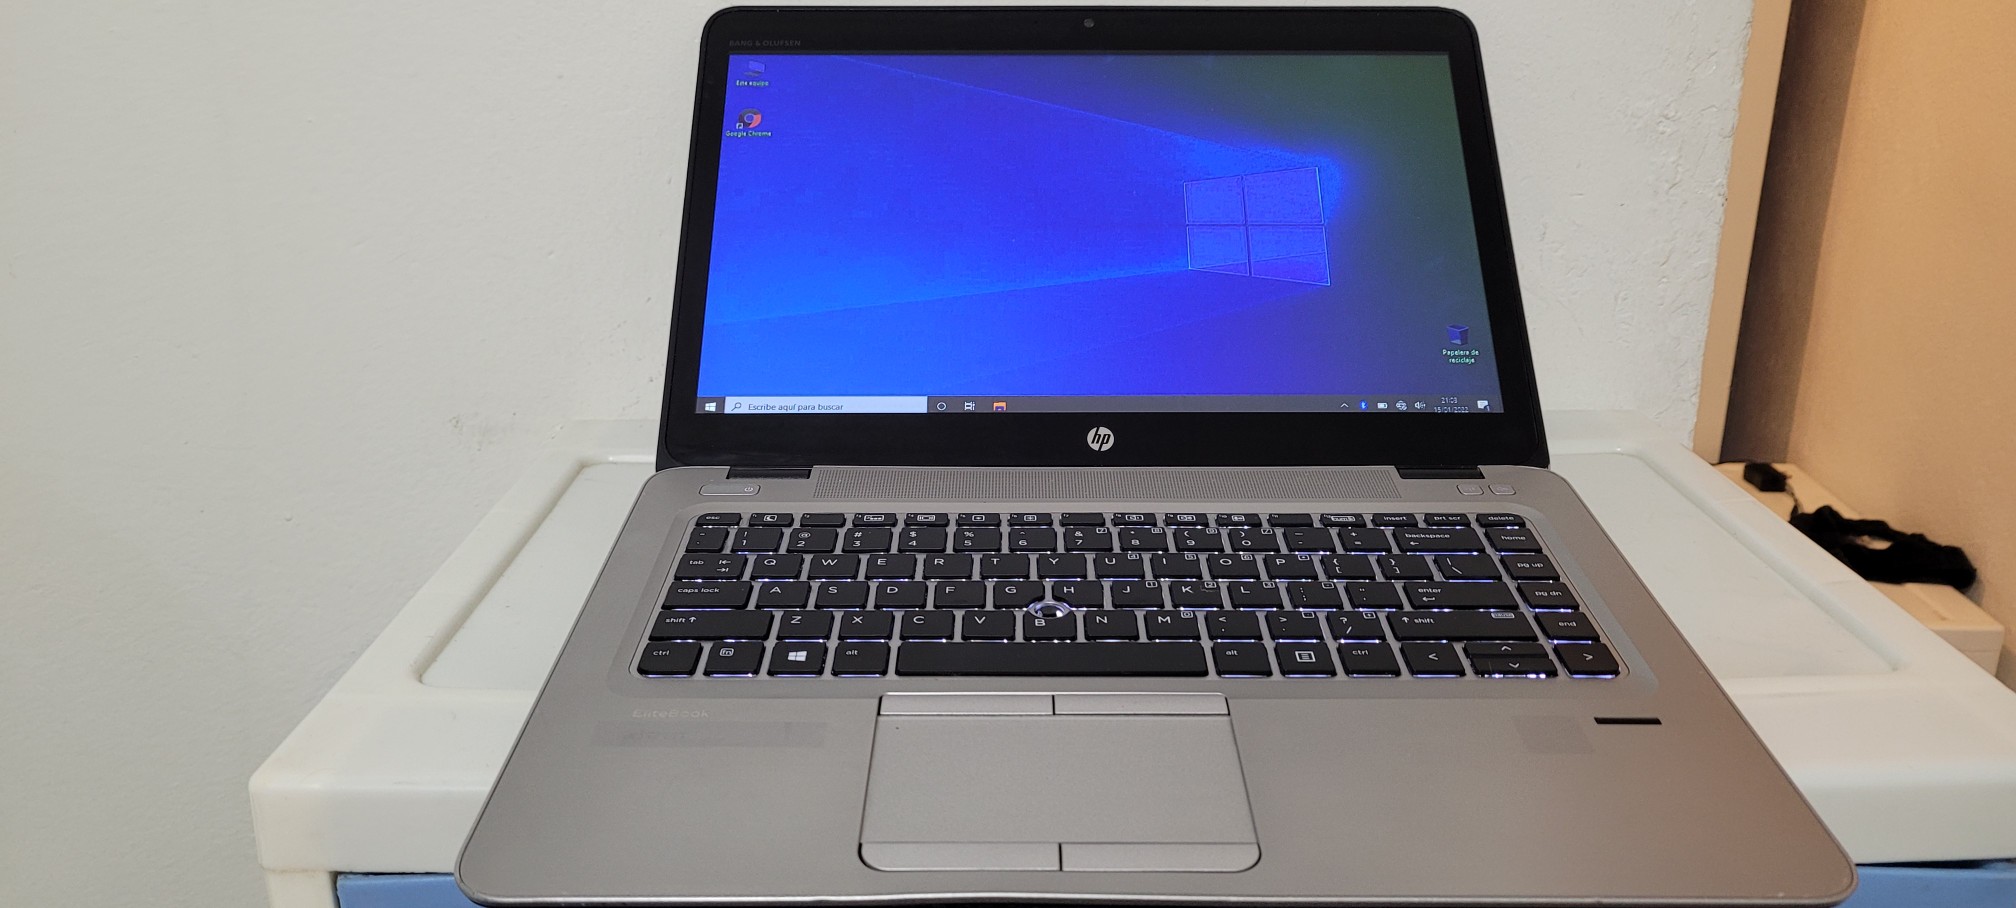 computadoras y laptops - Laptop Hp 14 Pulg Core i5 6ta Ram 8gb ddr4 Disco 500gb Full hdmi